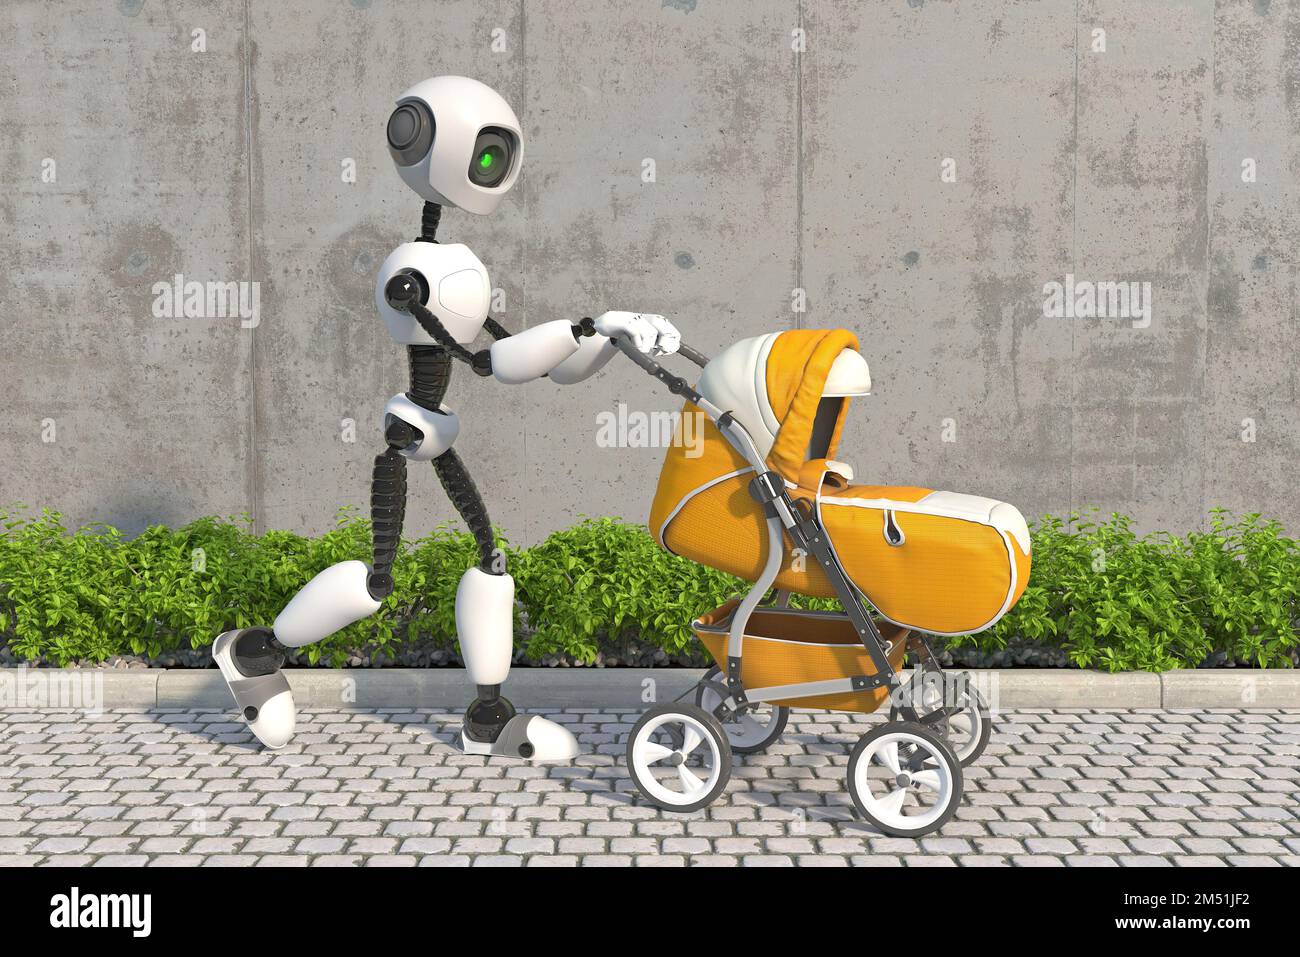 Robot inteligente fotografías e imágenes de alta resolución - Alamy